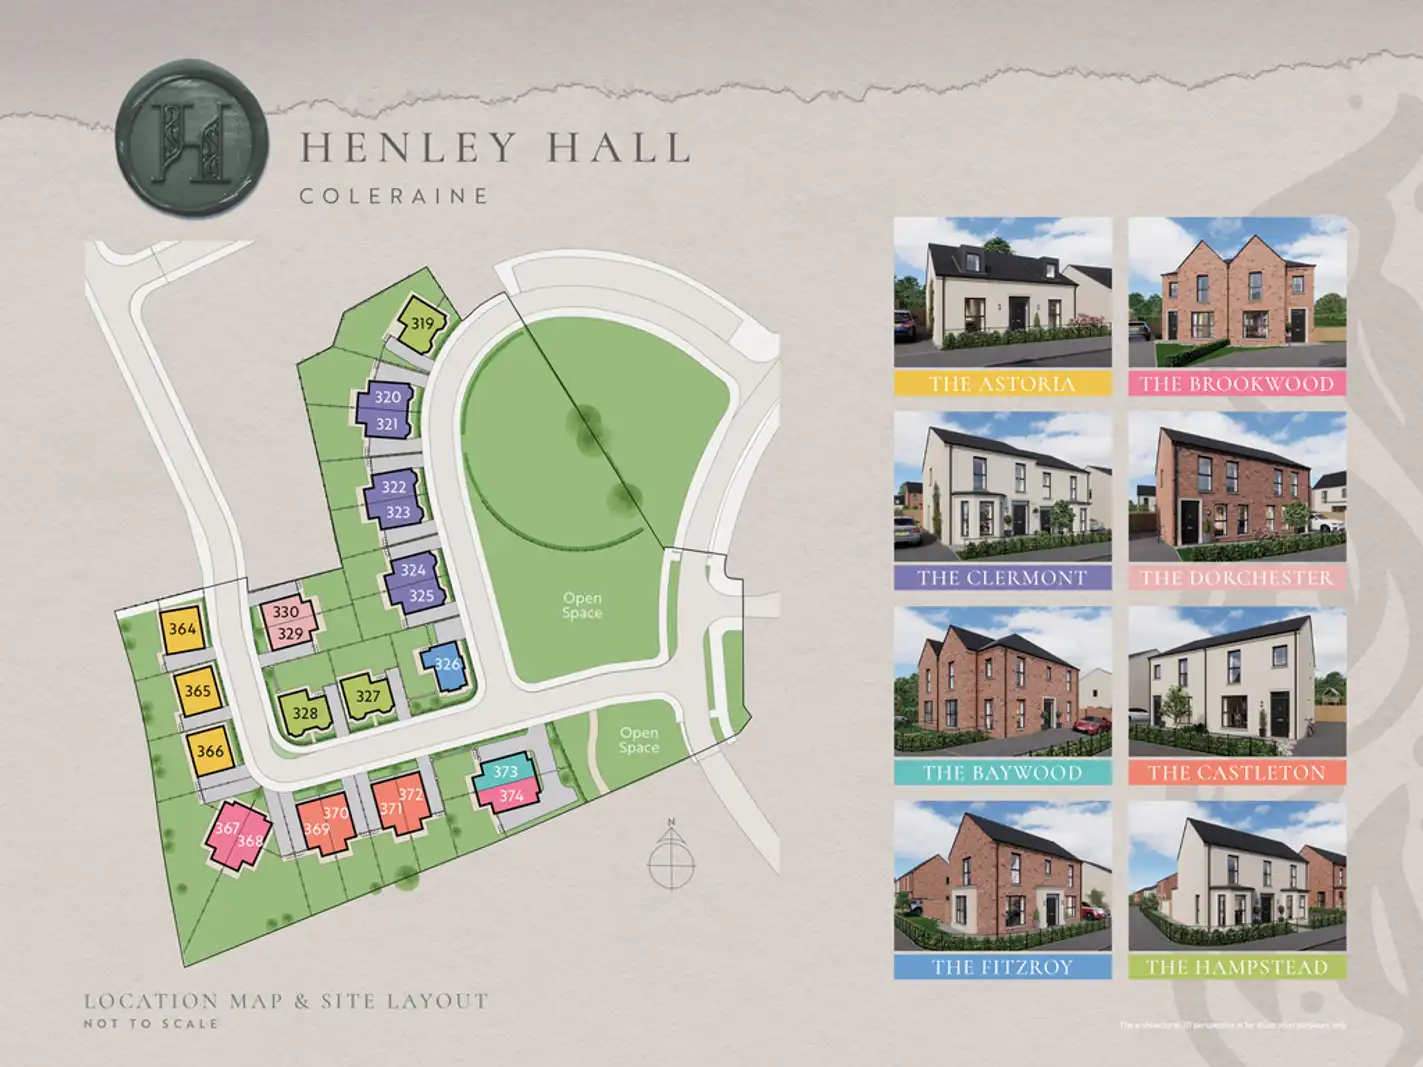 Site 366 (The Astoria) Henley Hall, Coleraine, County Antrim